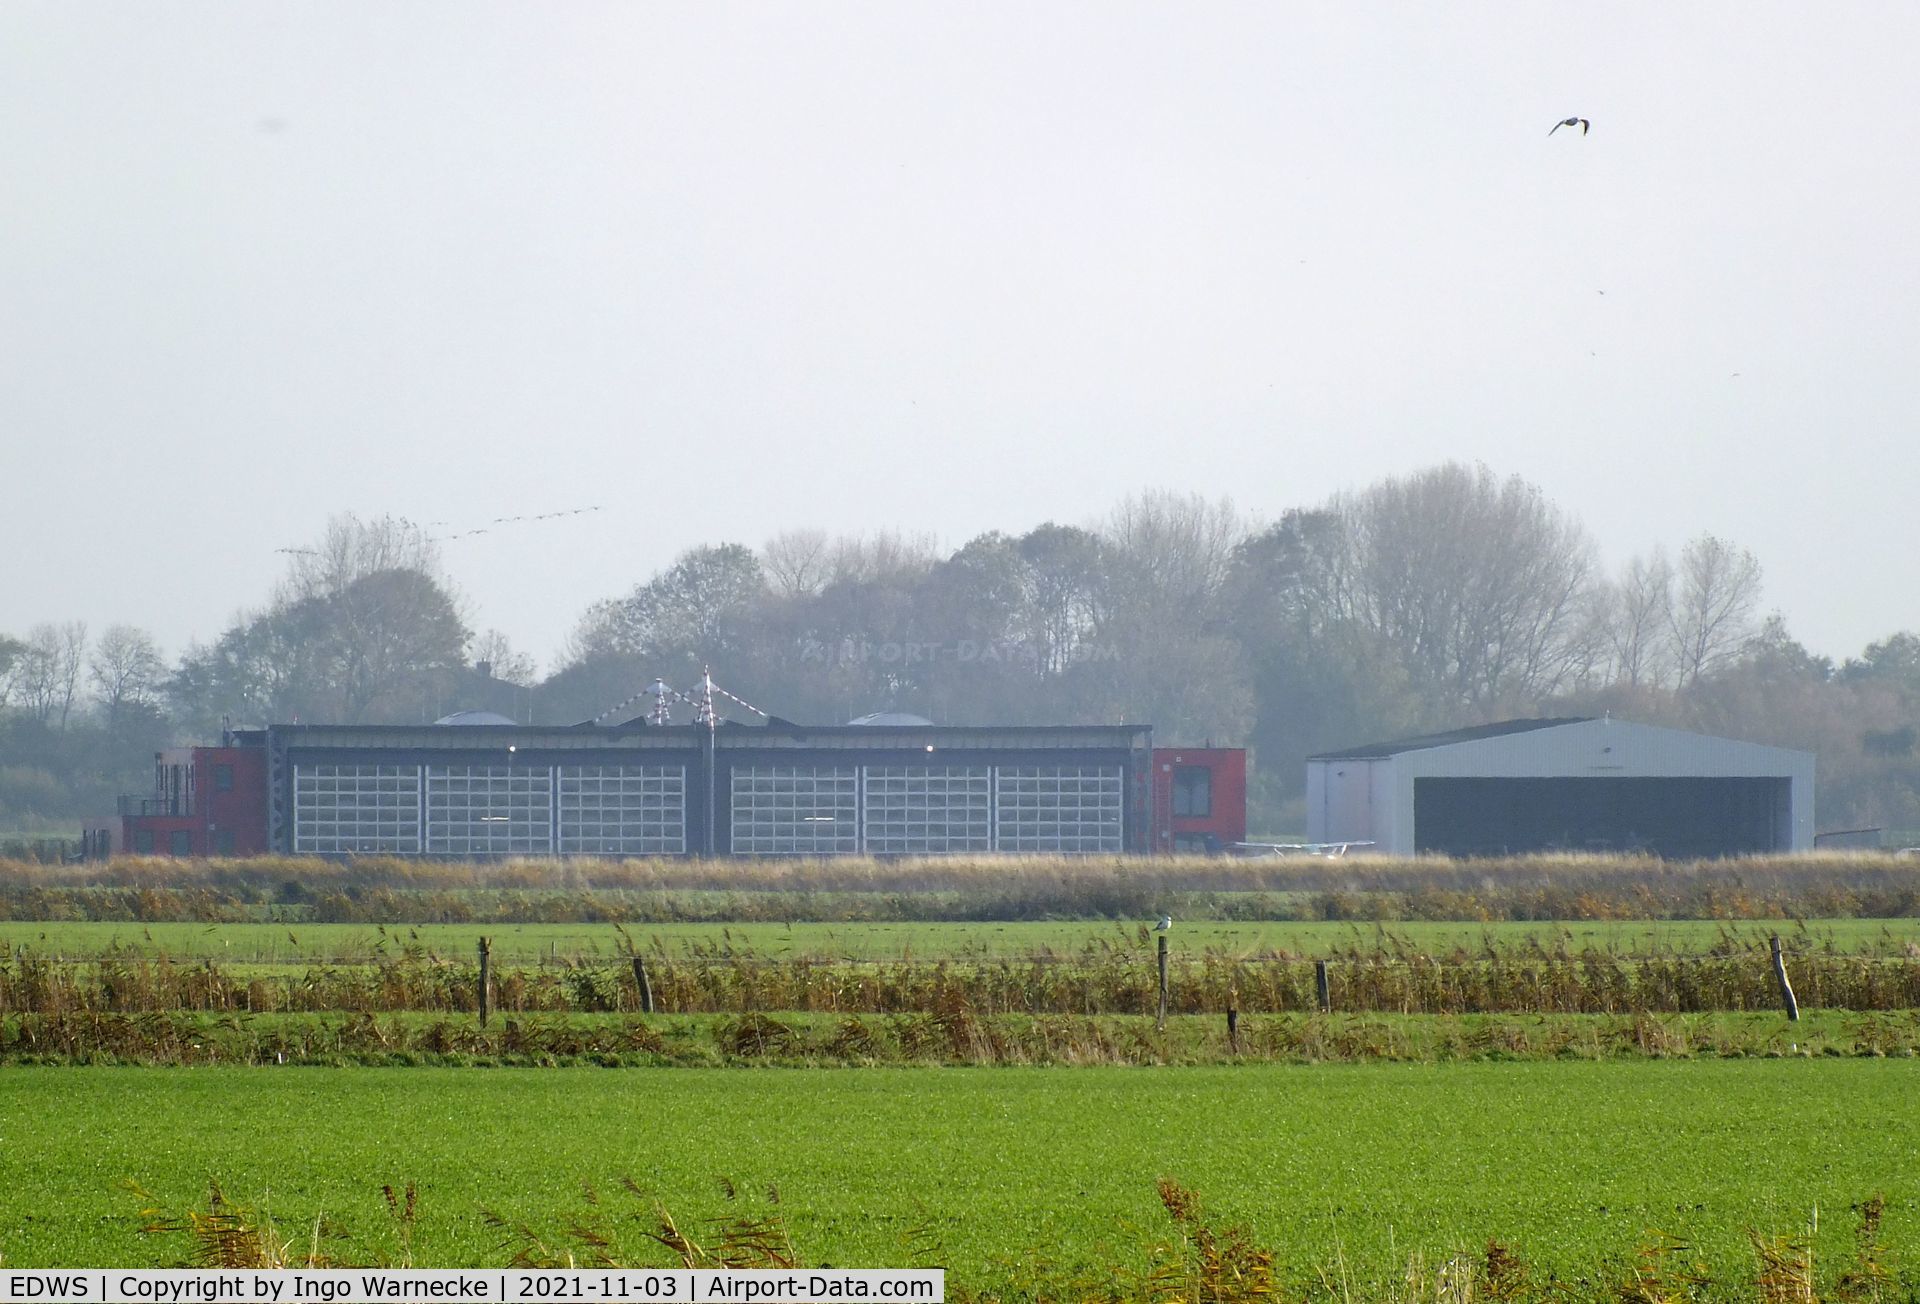 EDWS Airport - Norden-Norddeich airfield hangars seen from a distance